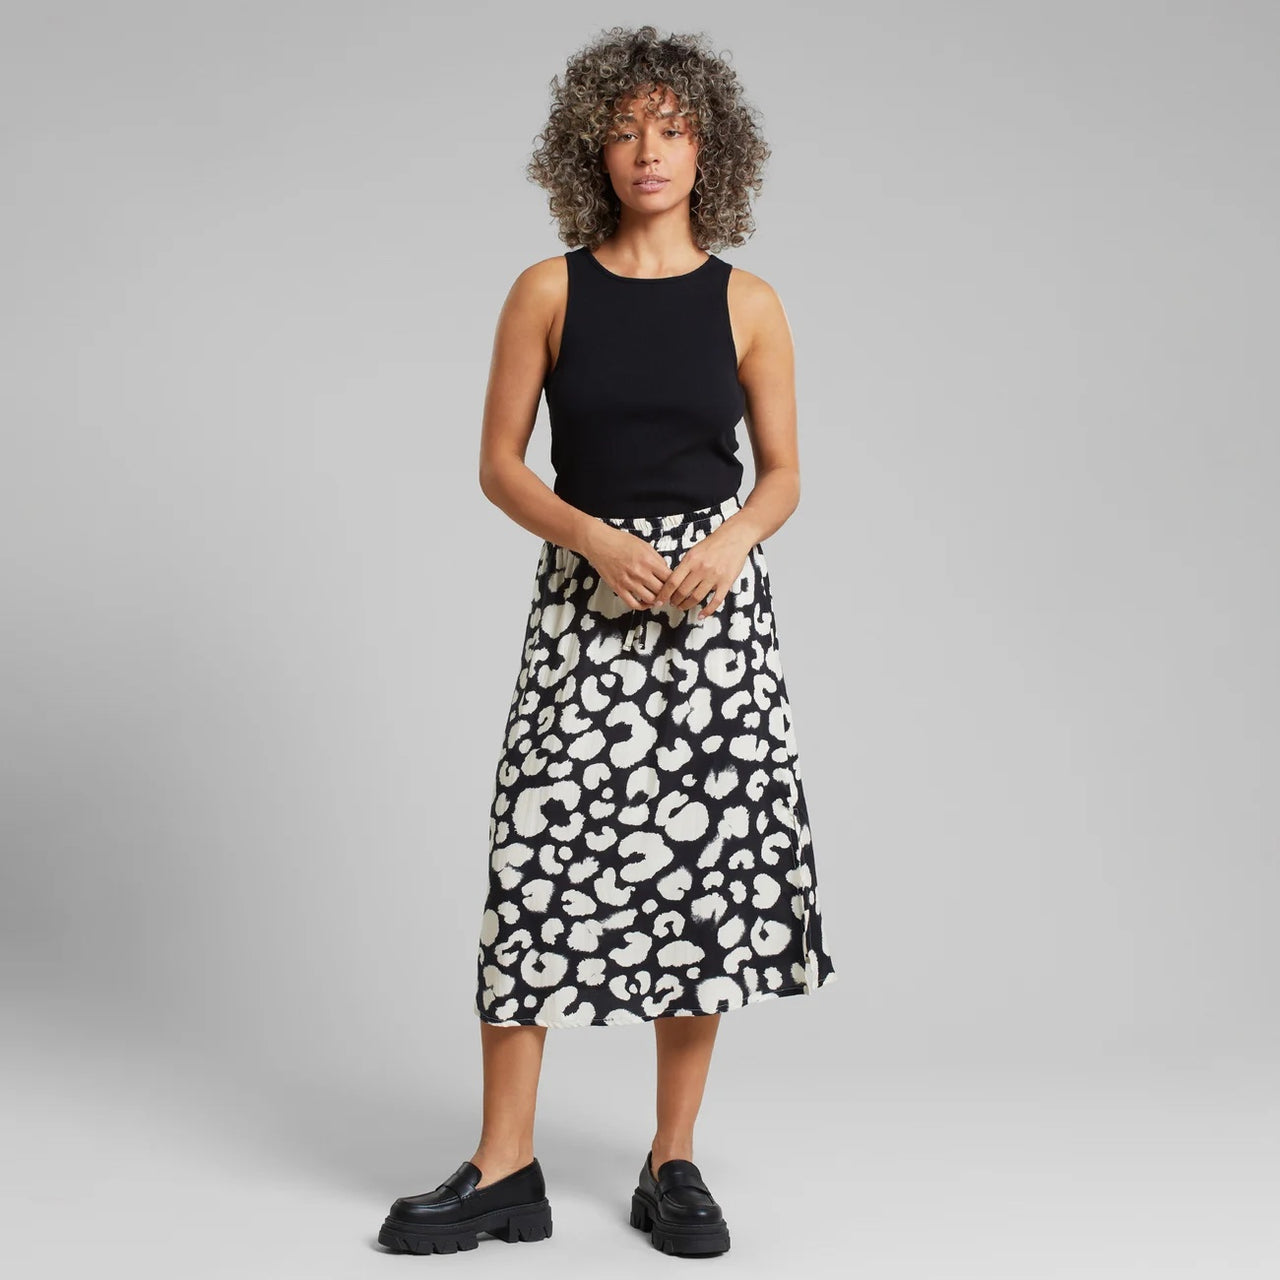 Skirt Klippan Painted  Leopard Black - LEEF mode en accessoires